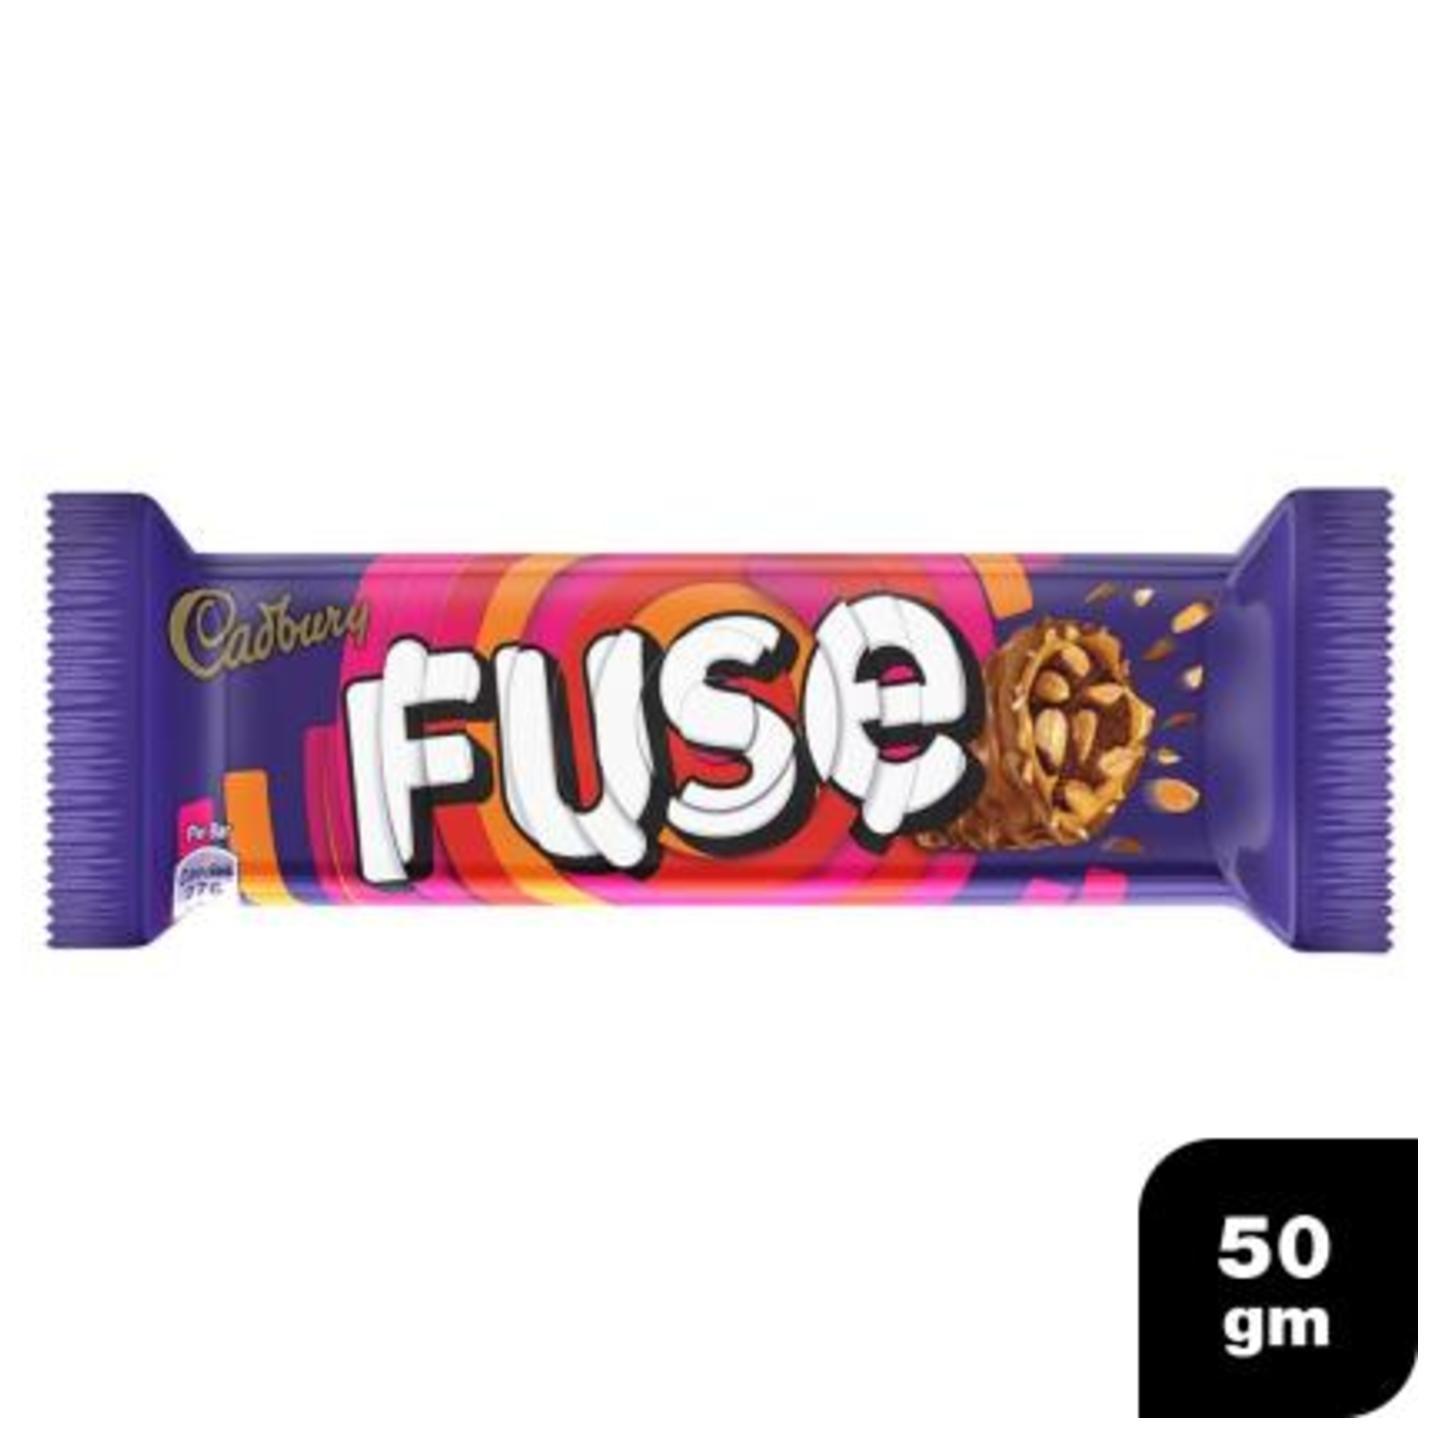 Cadbury Fuse Chocolate Bar 50 g